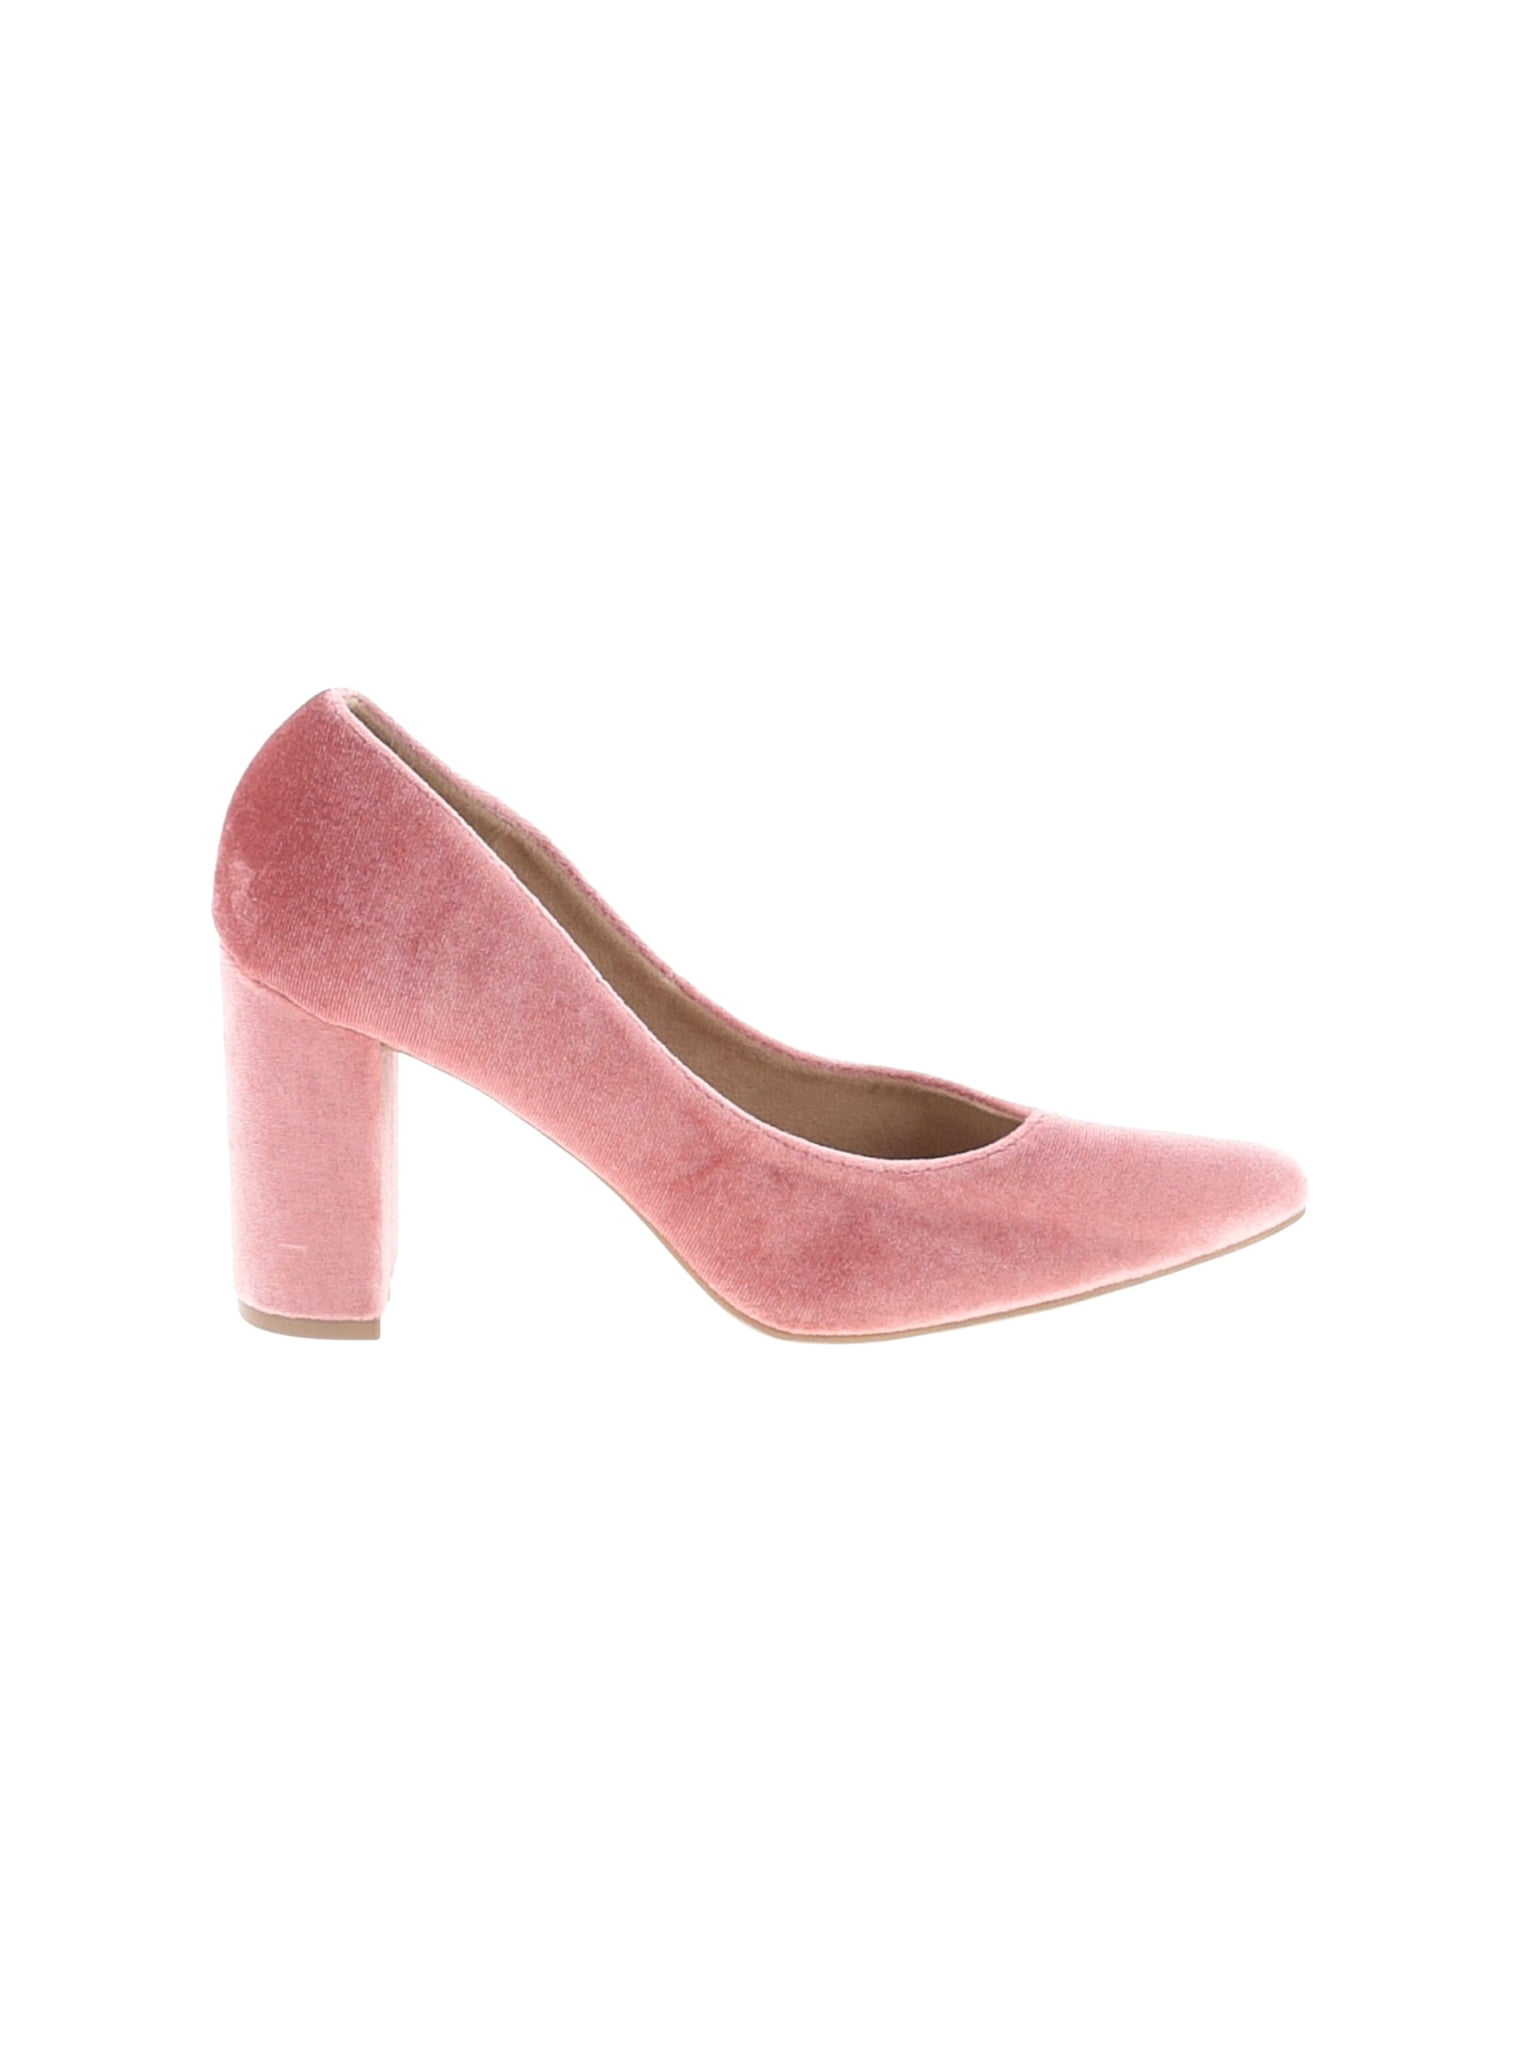 old navy pink heels